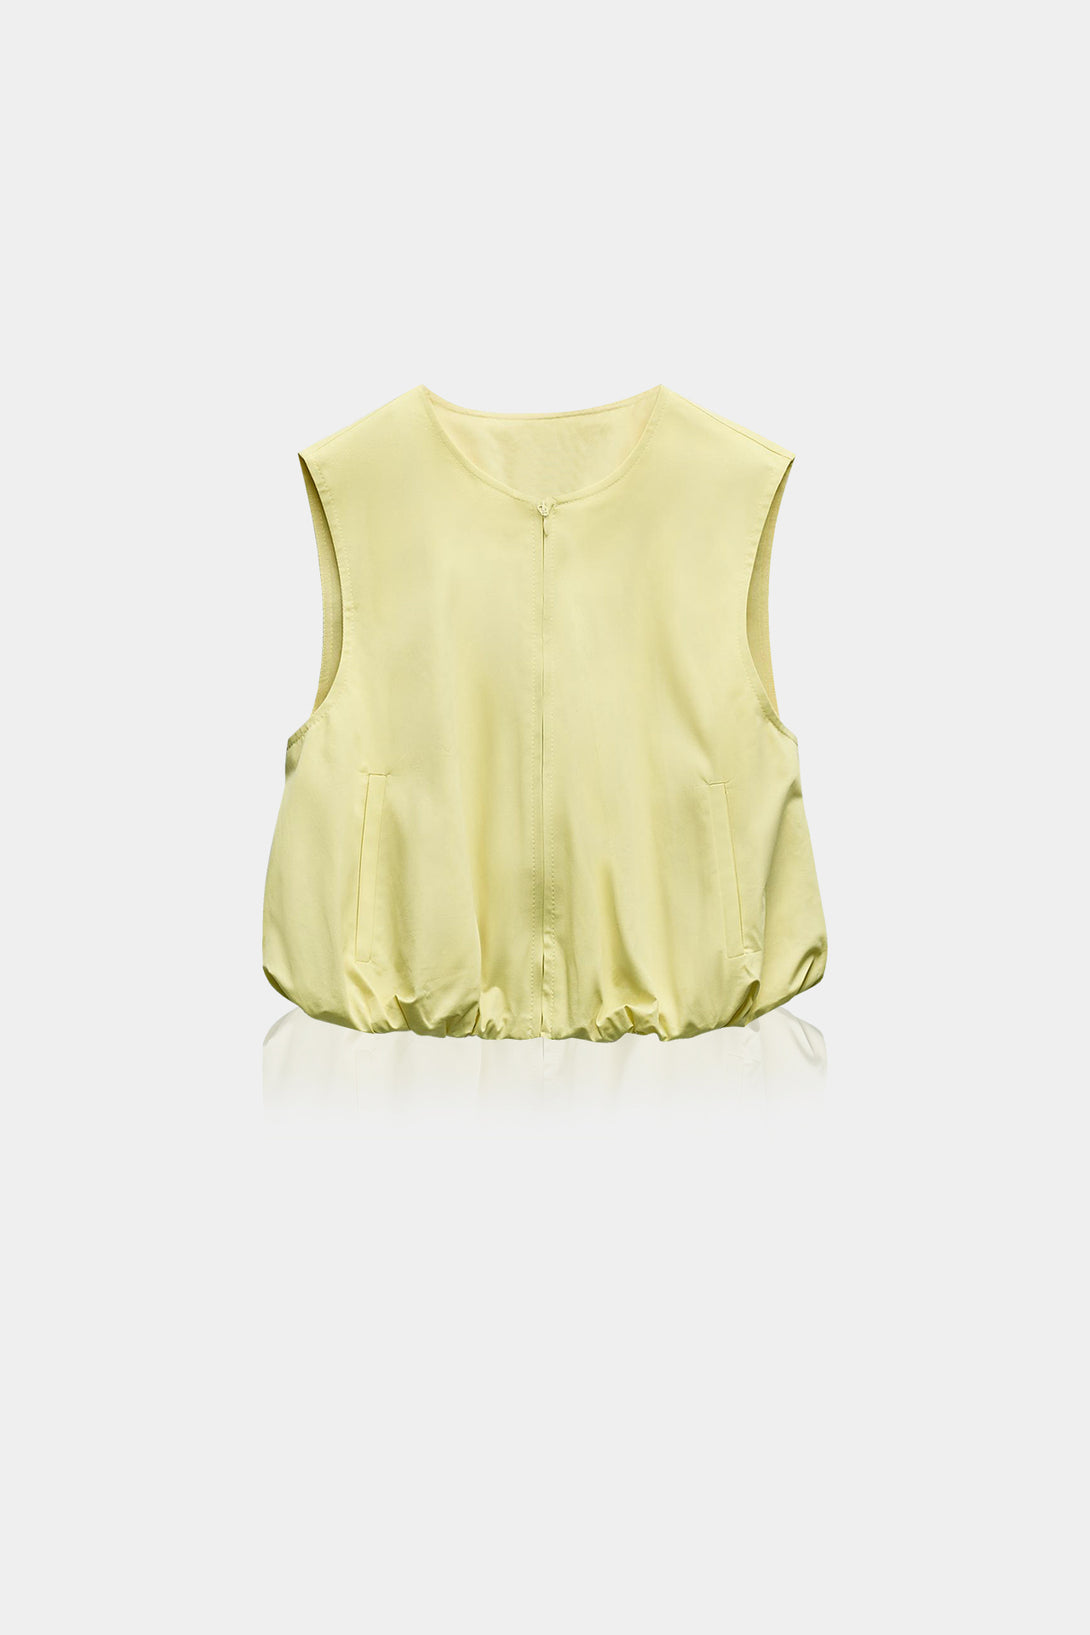 cotton bubble hem tops, gathered hem blouse, HT-360-Collective,